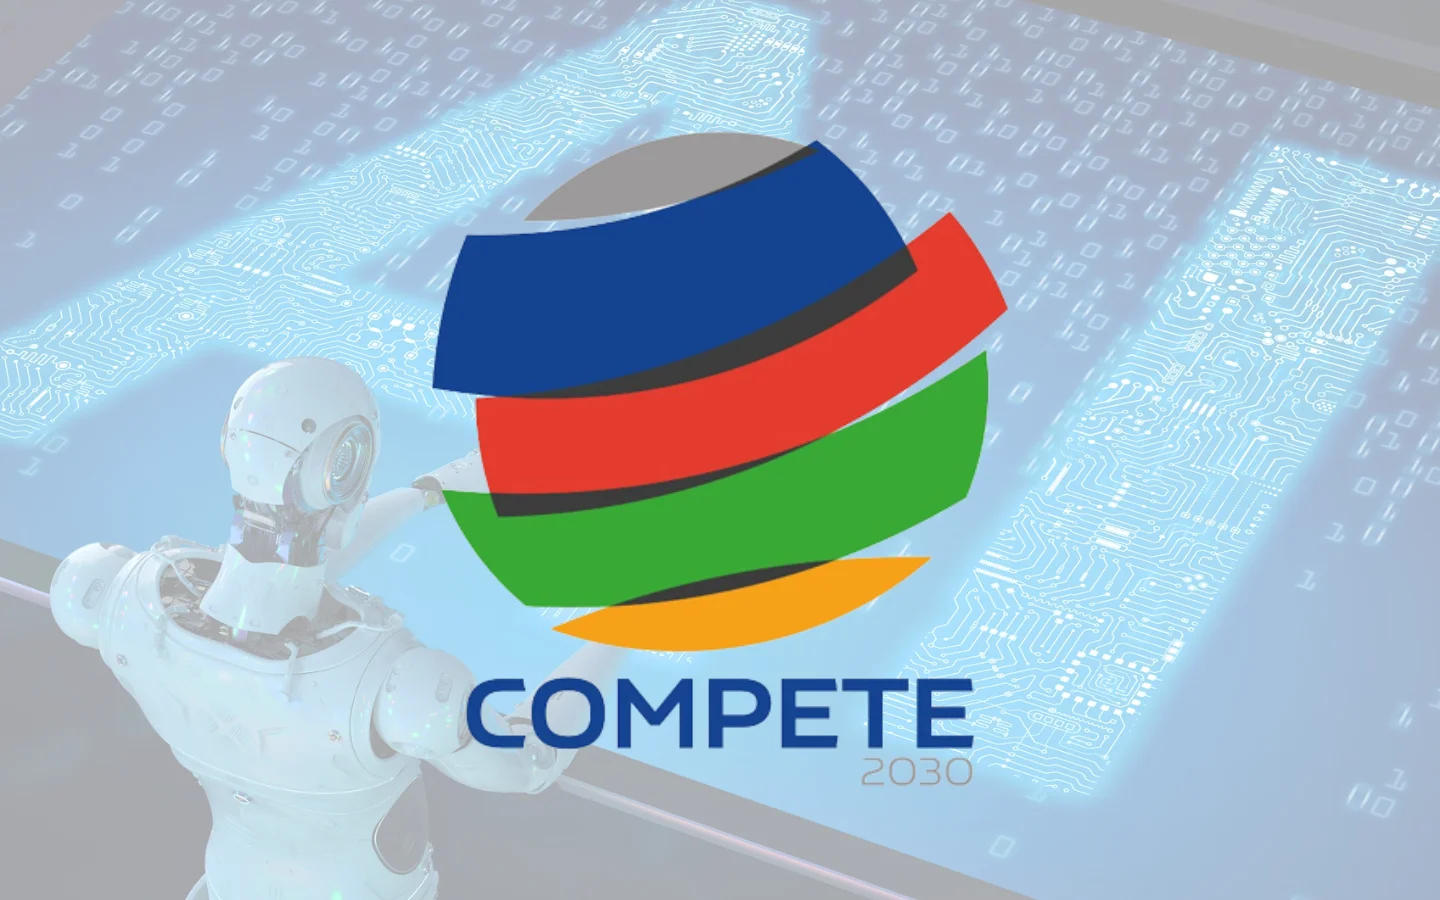 COMPETE 2030 “Boas Conversas” sobre inteligência artificial